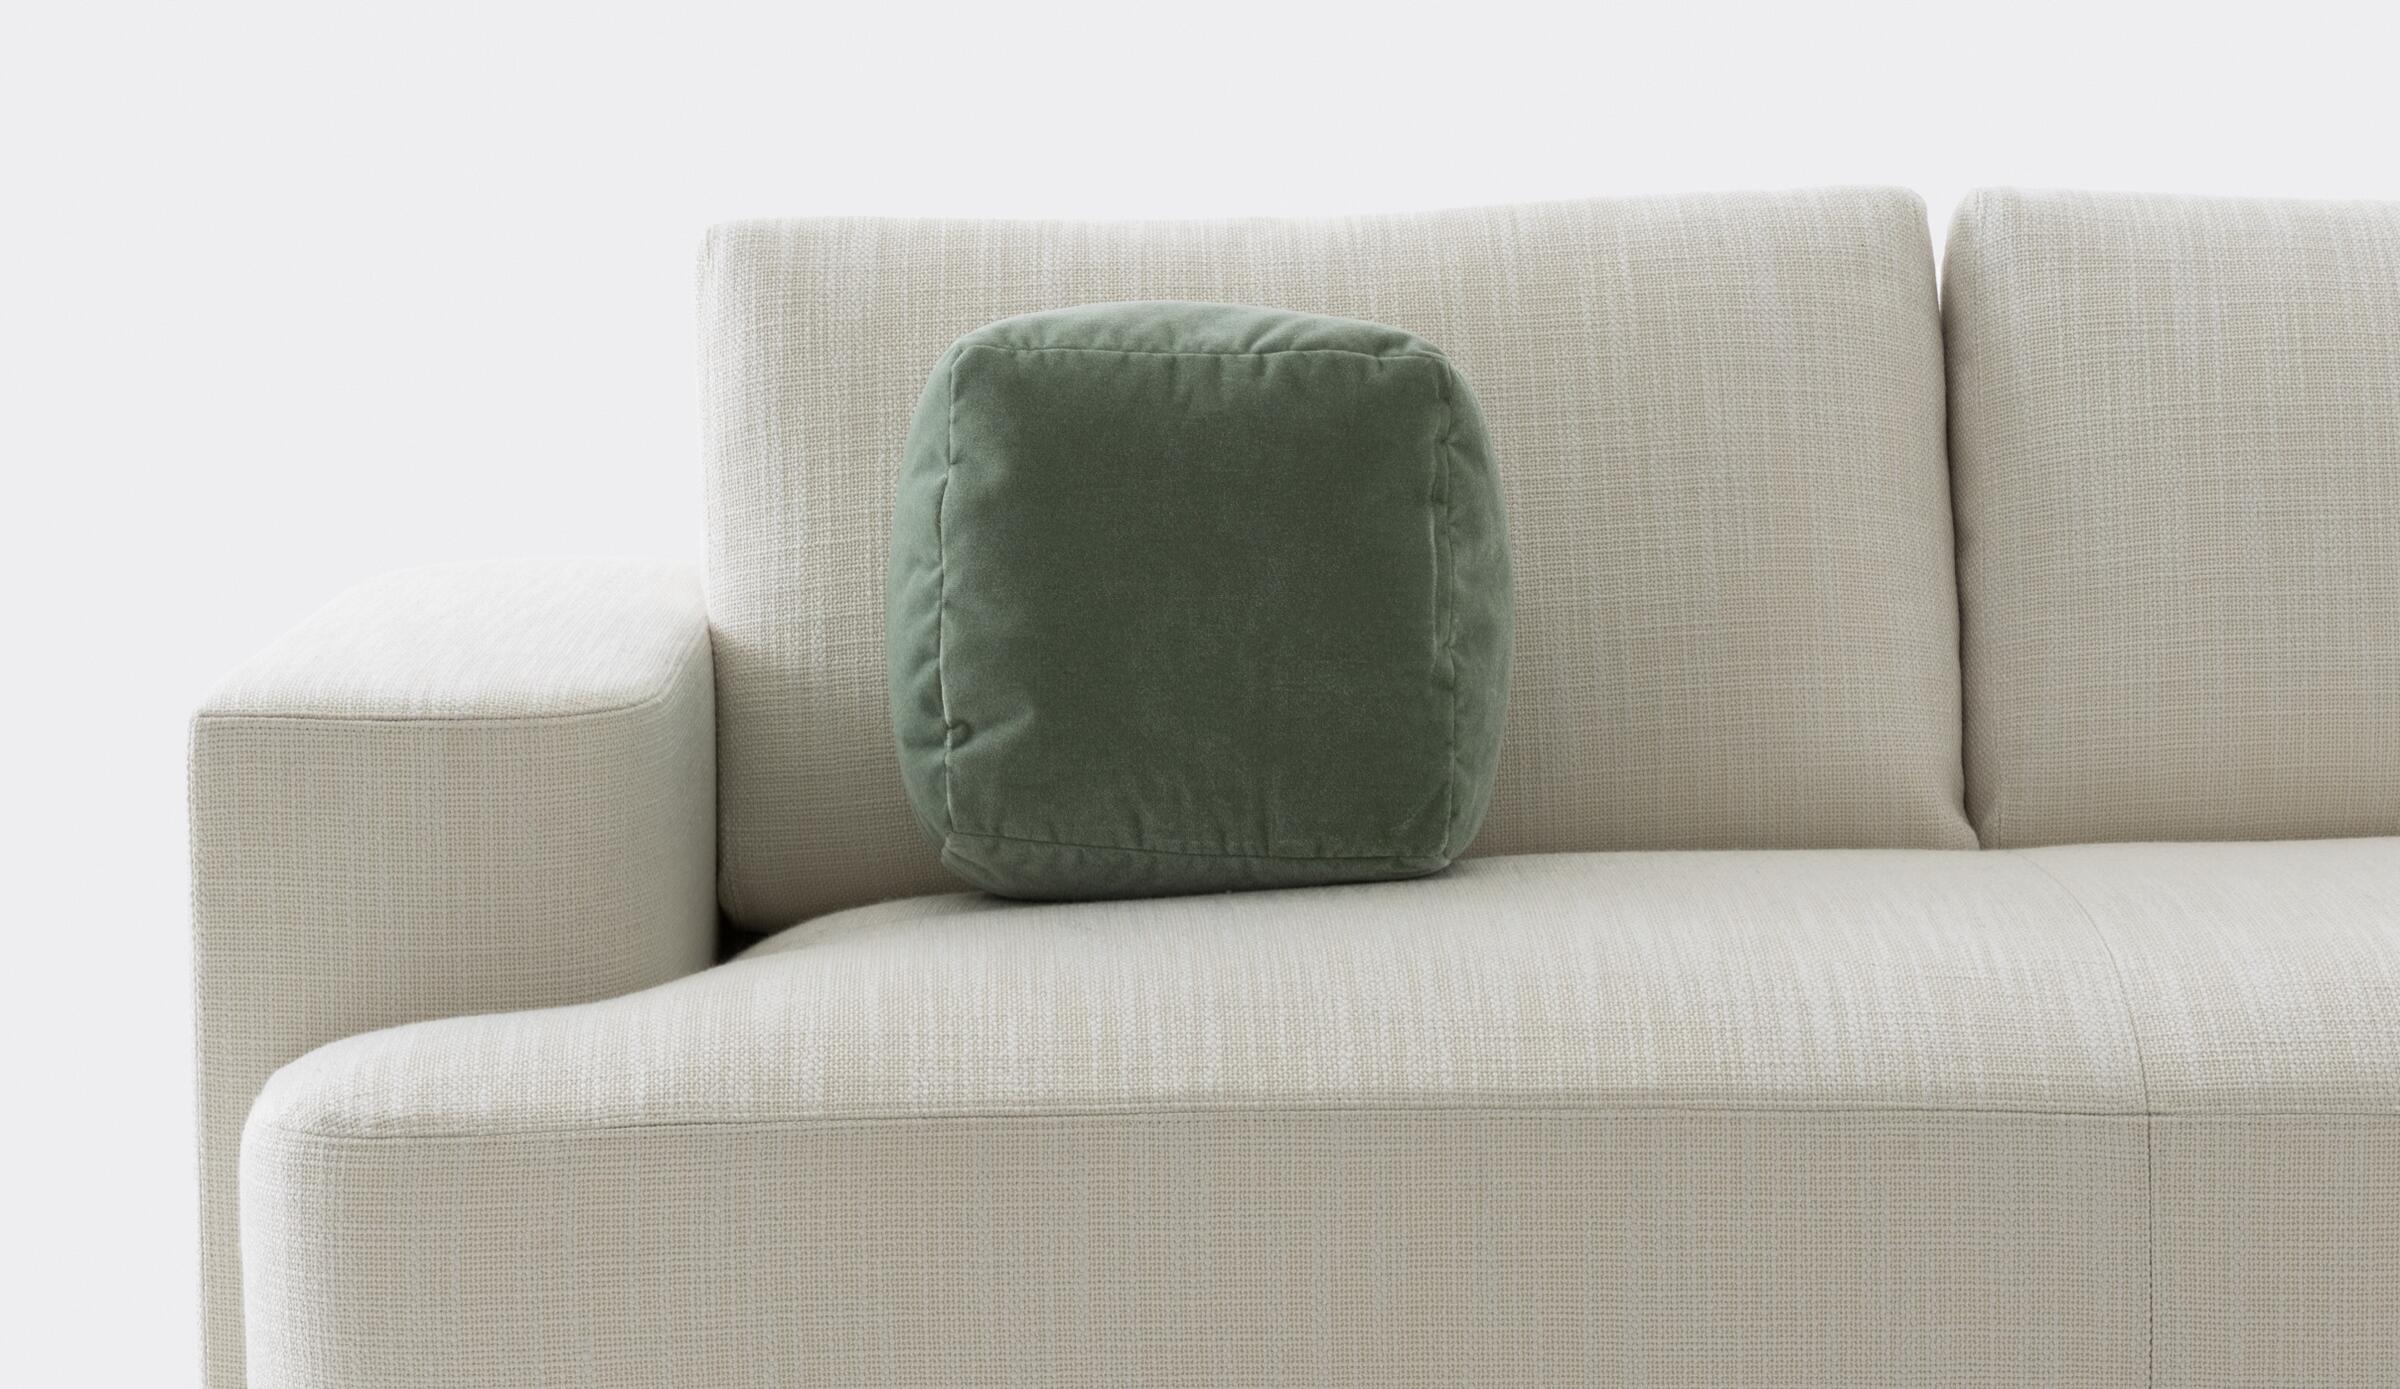 Cube Pillow, 10 in, Cloud Nine: Mint